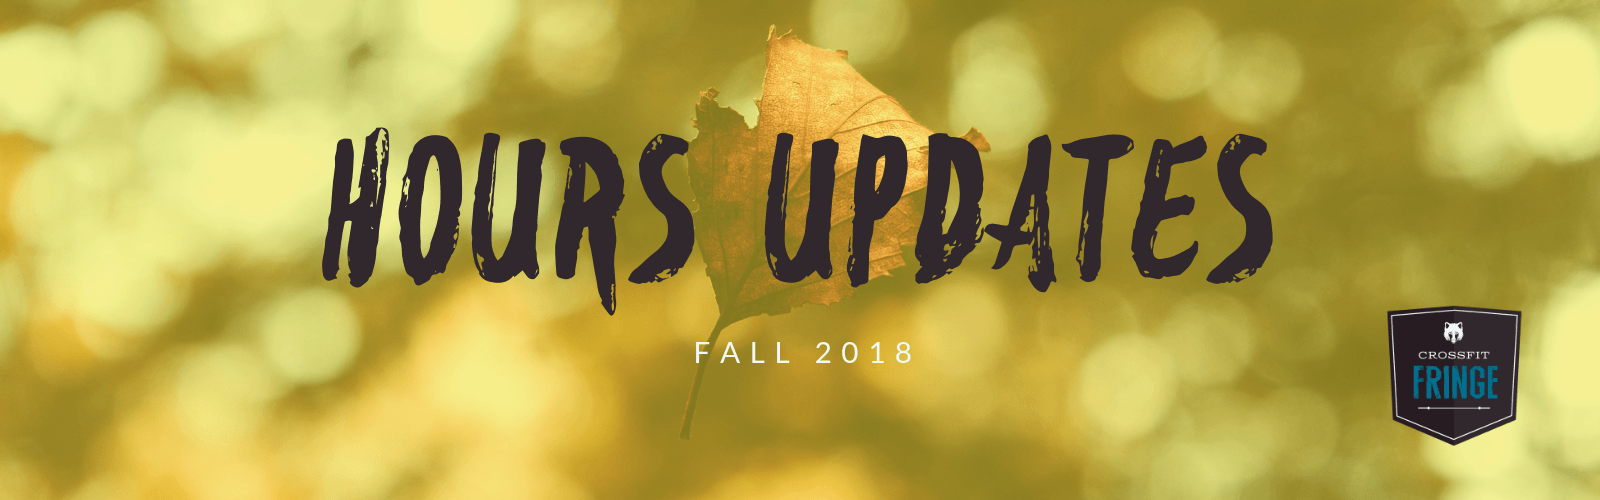 Fall 2018 Hours Updates - CrossFit Fringe - Columbia MO